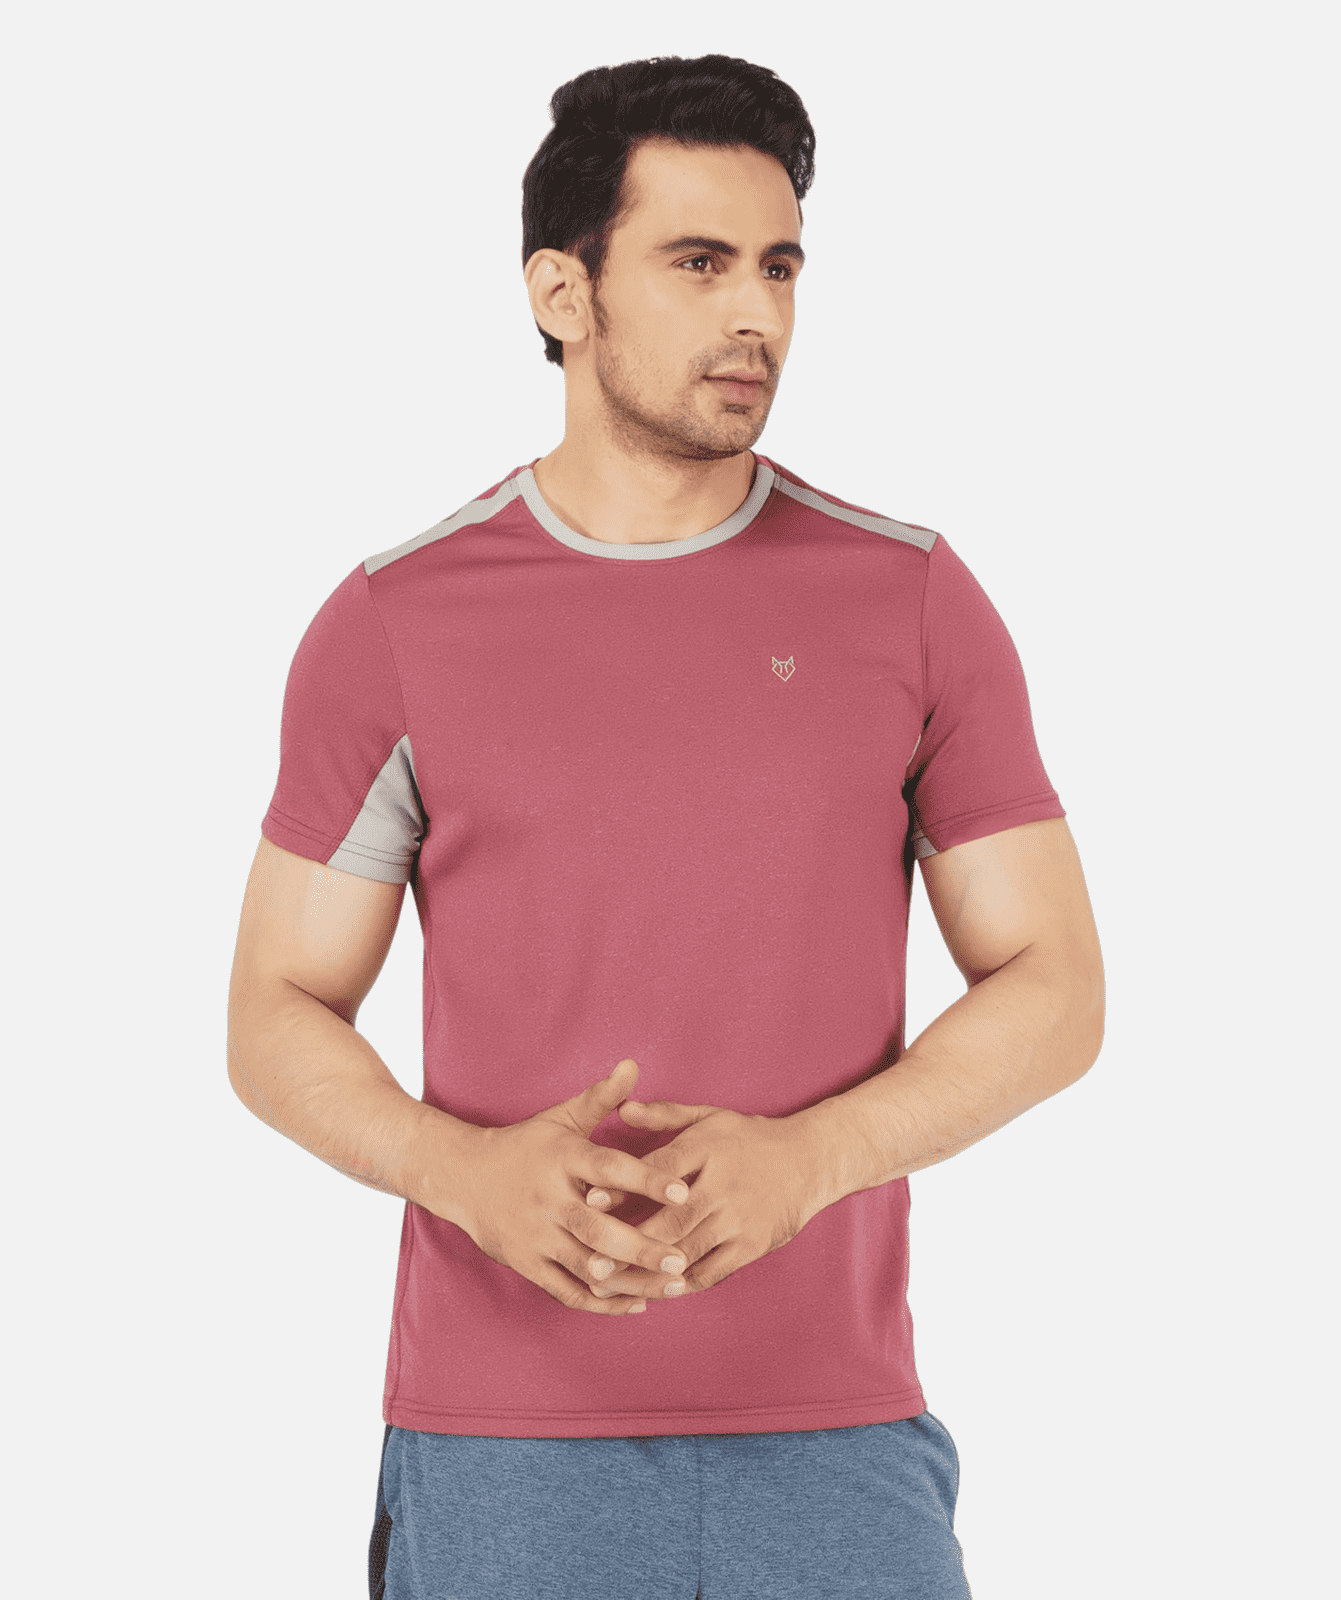 Skin Snug Tshirt | Casual Comfort | Cotton Lycra Men's Tshirt